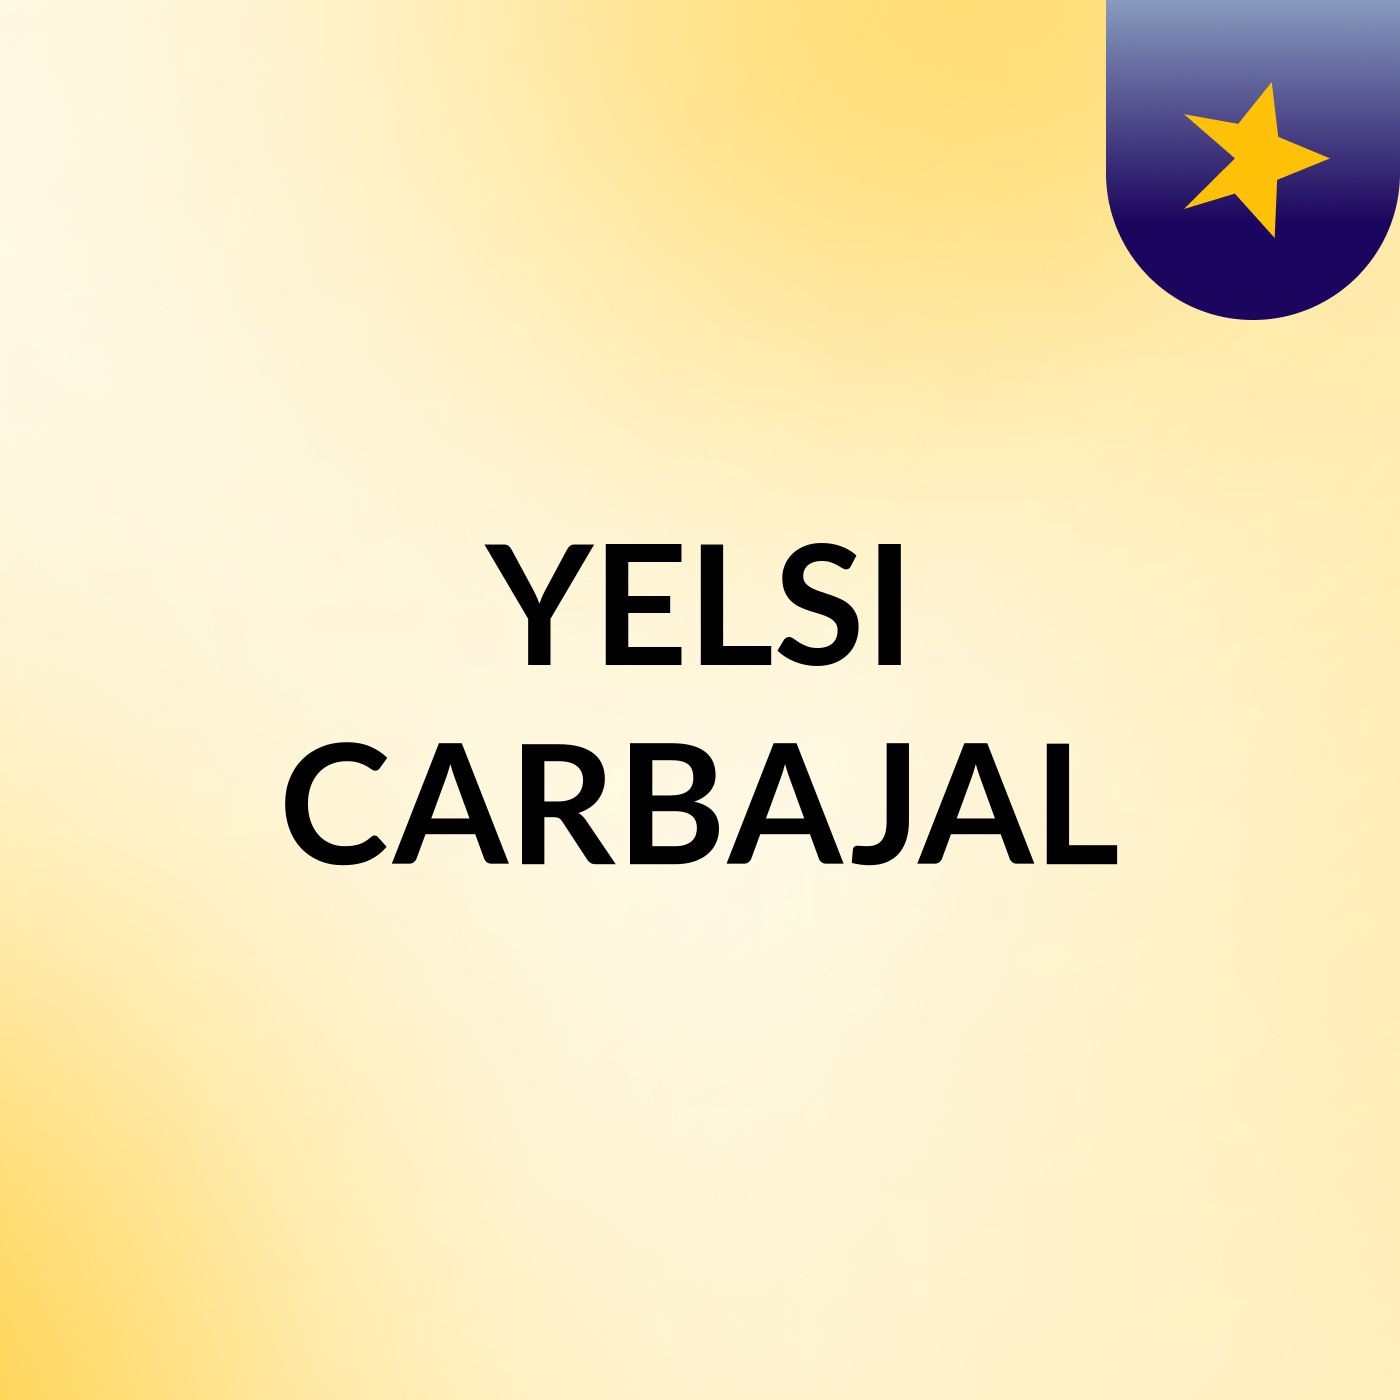 YELSI CARBAJAL